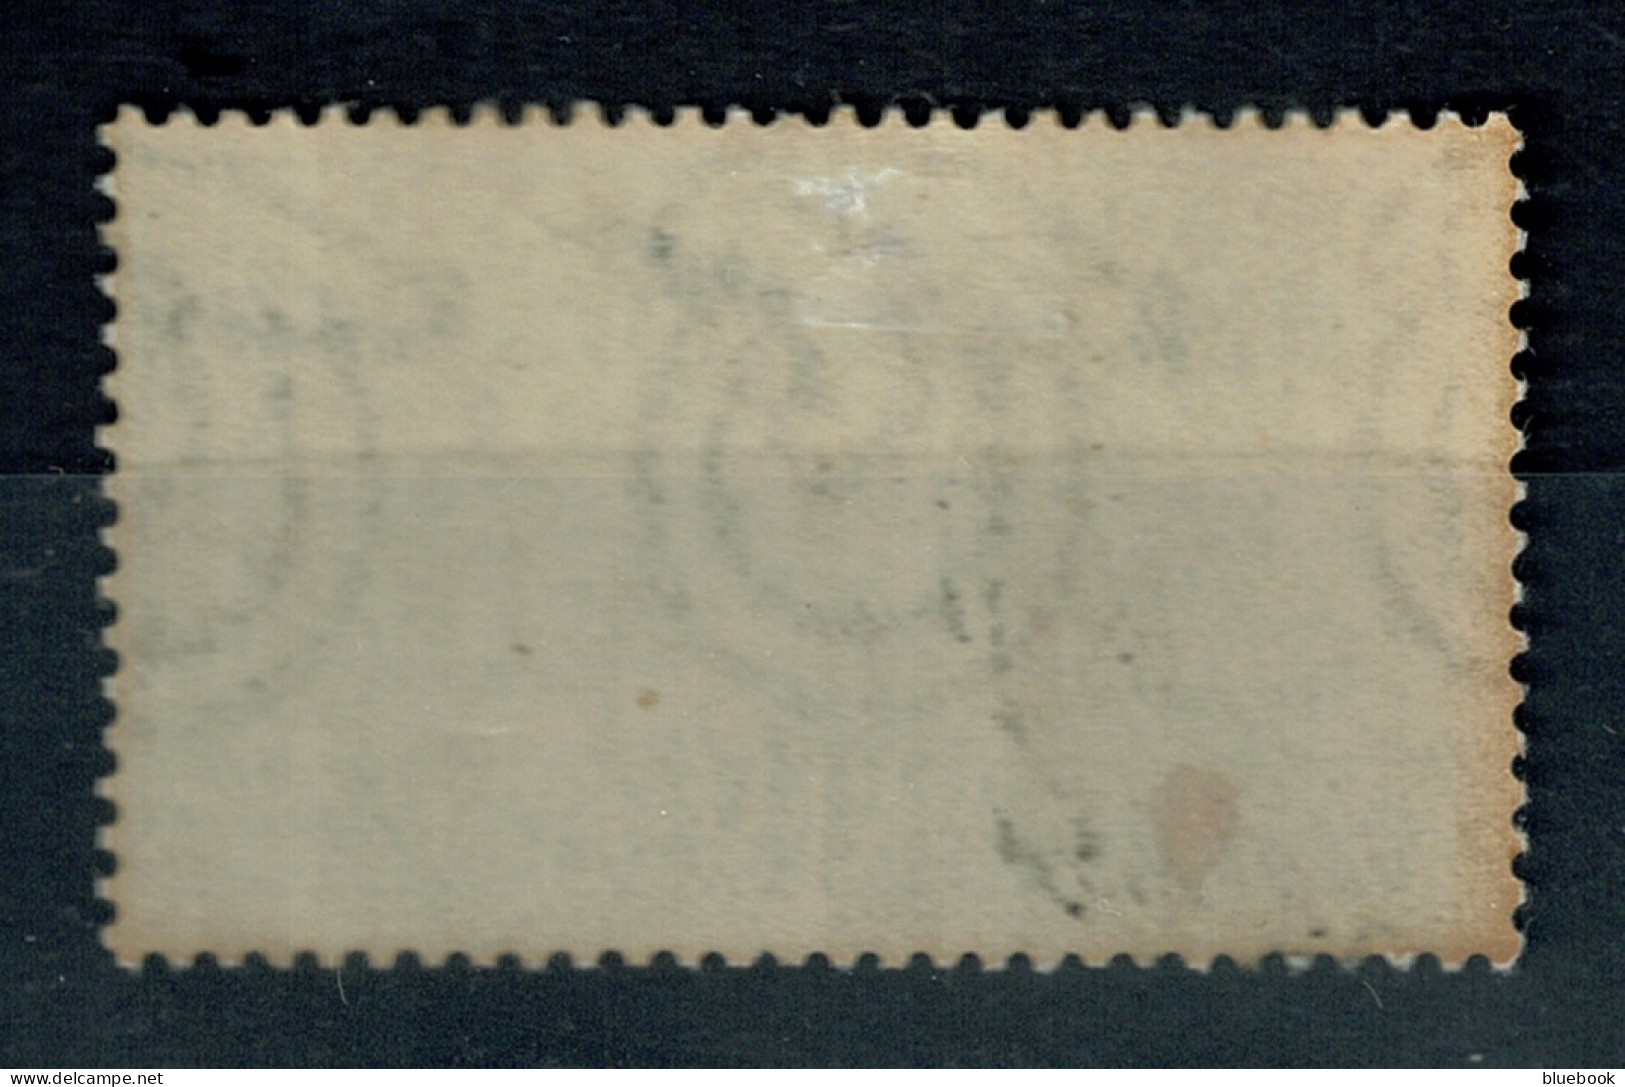 Ref 1612 - 1950 Italy  Treiste Zone A - Unesco L20 Fine Used  Stamp Sass. 71  - Used